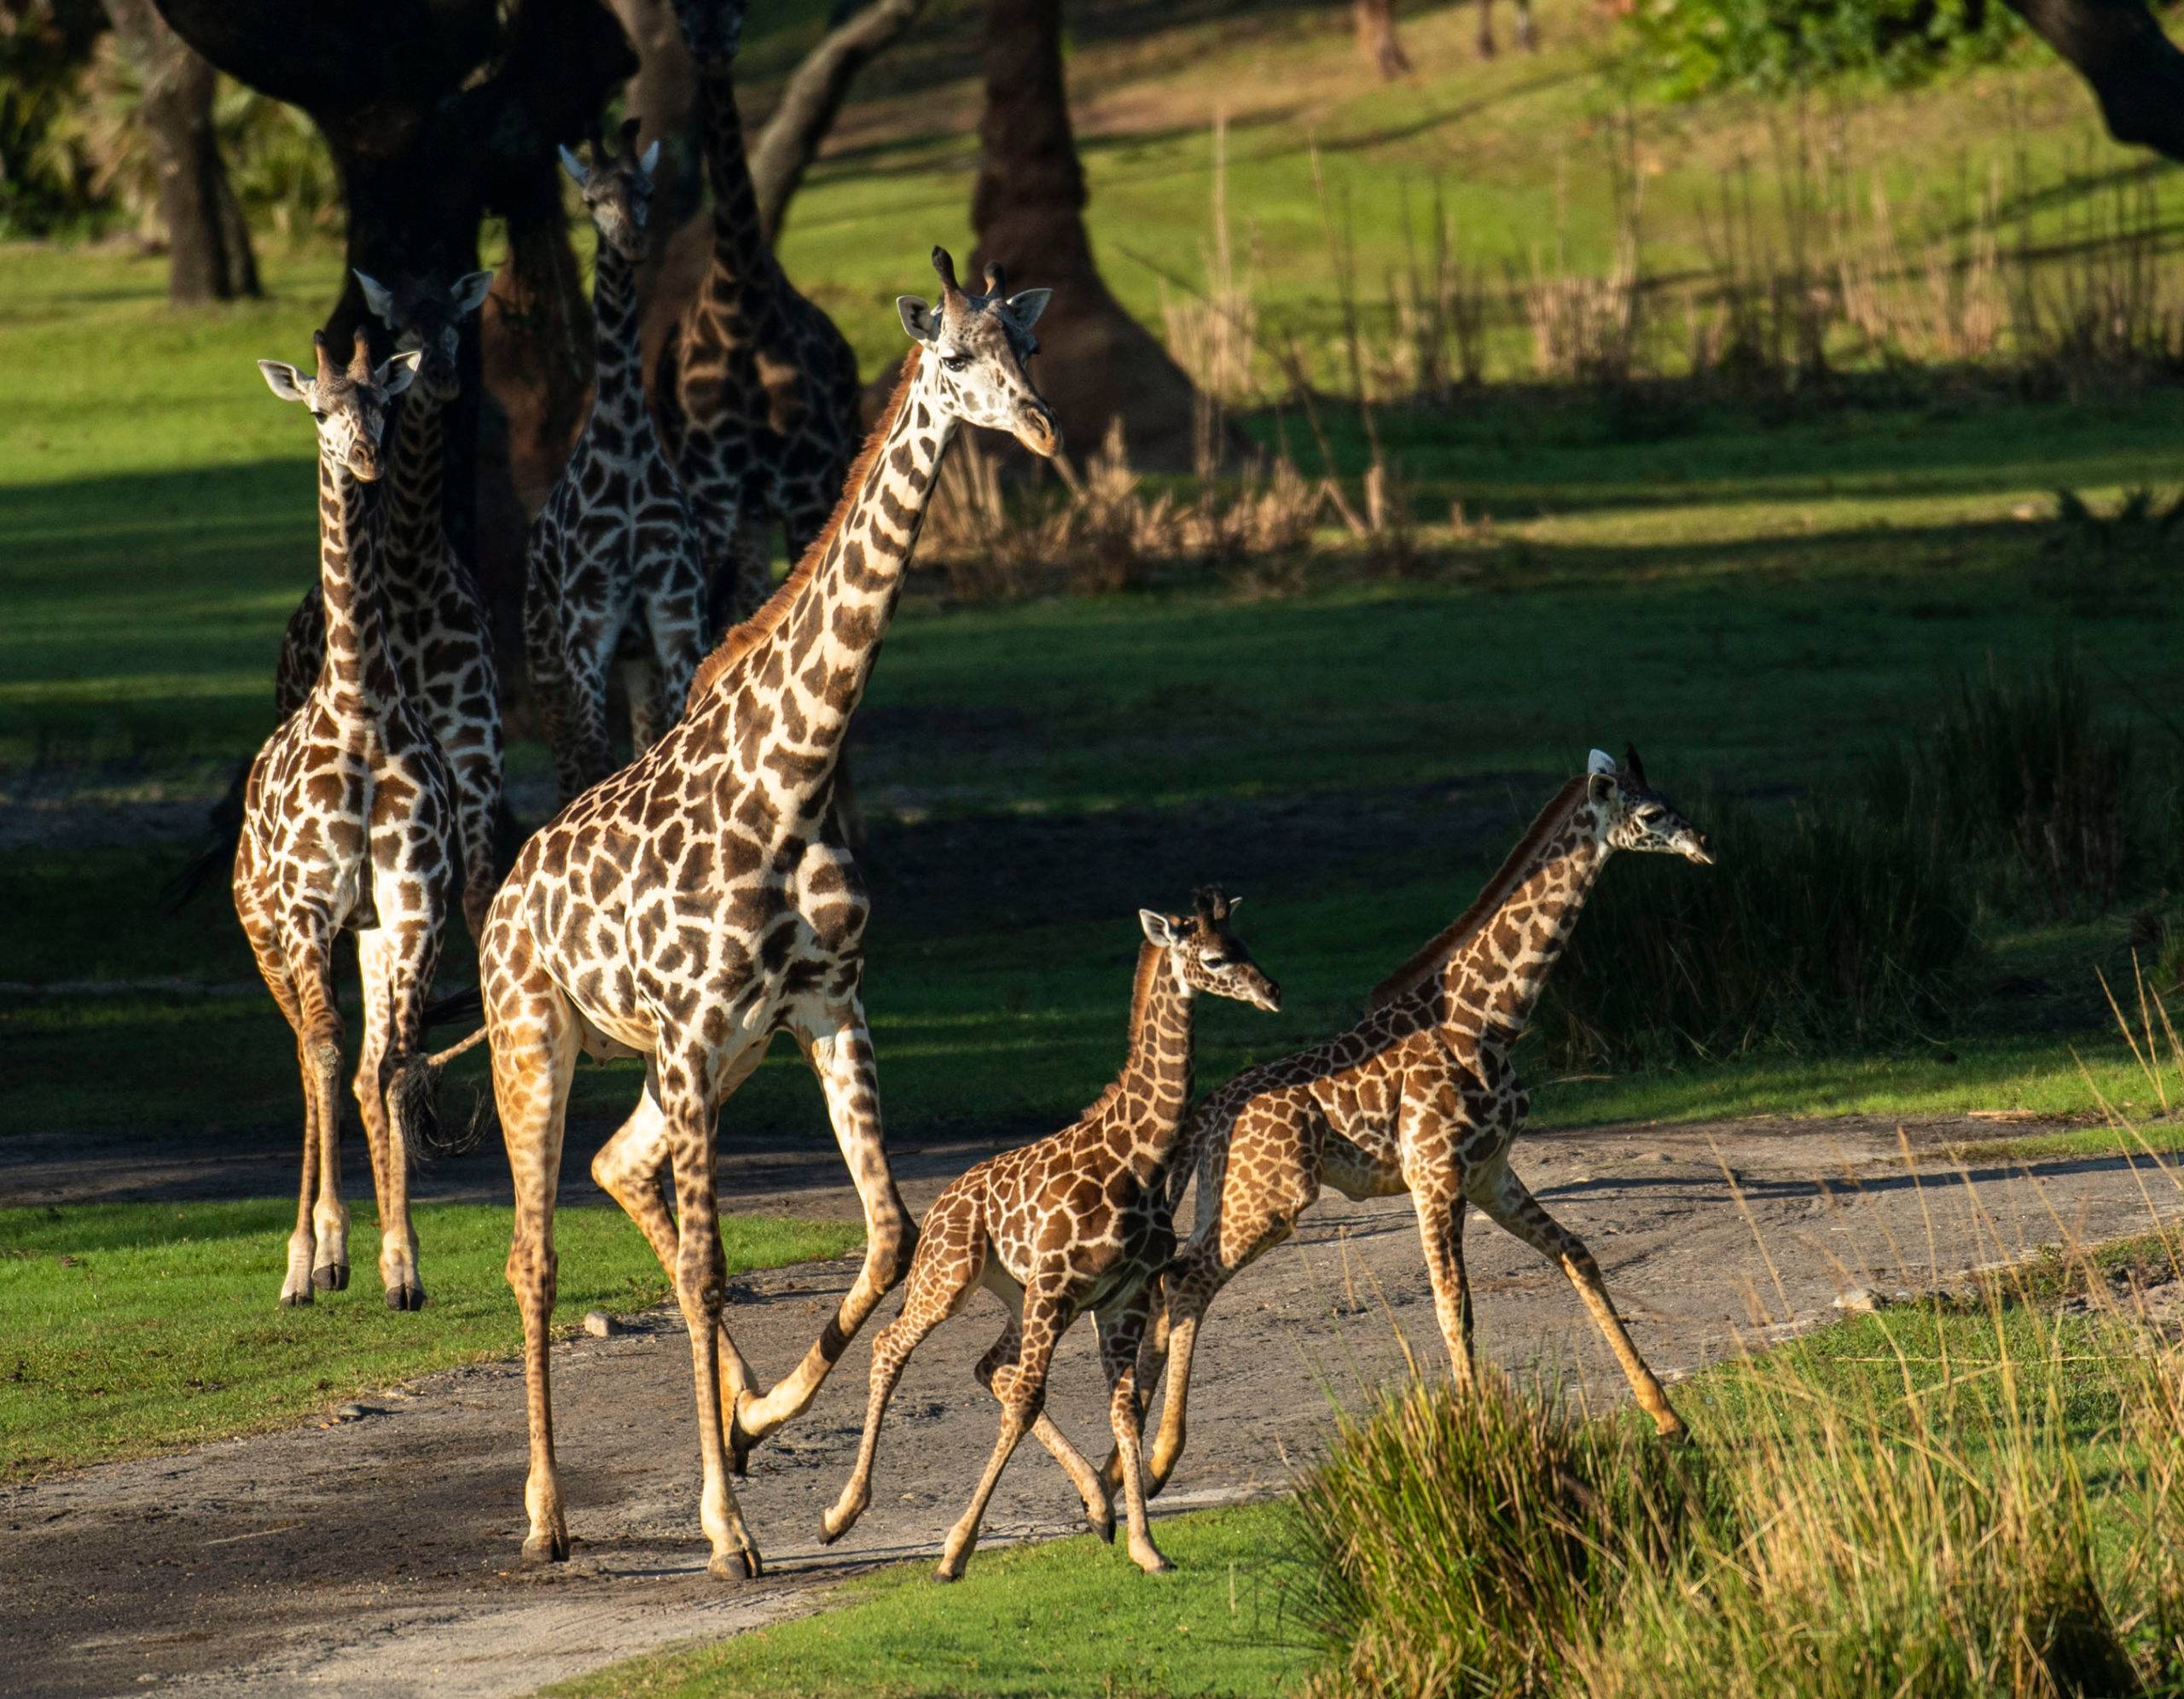 Giraffe Calves join the herd on Kilimanjaro Safaris - December 2020